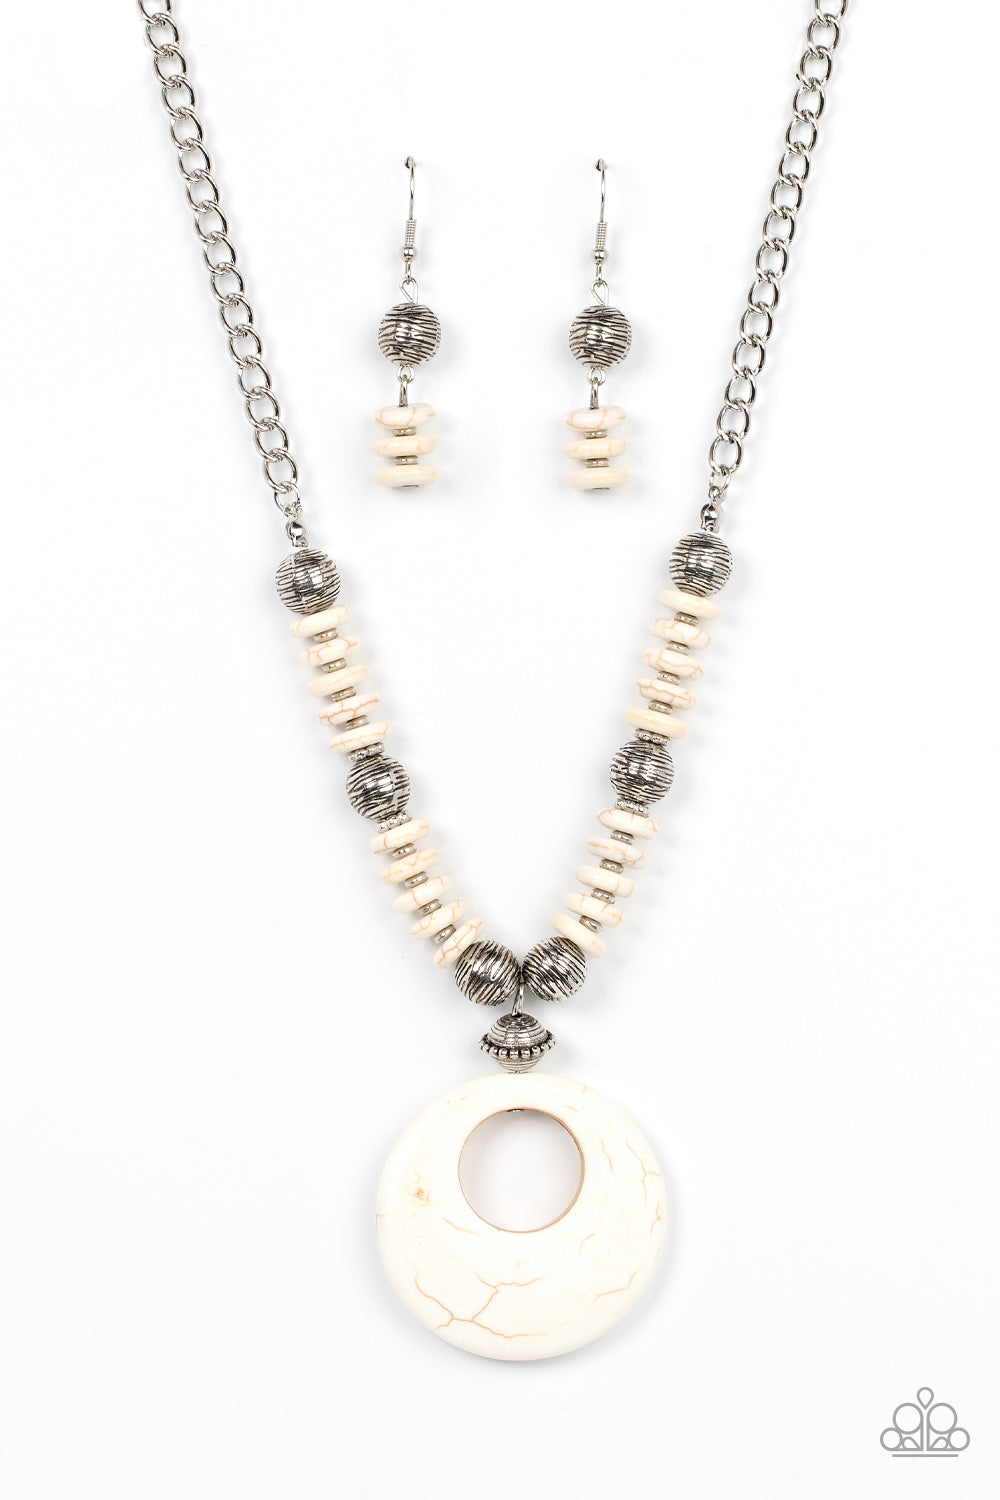 Oasis Goddess Necklace - White